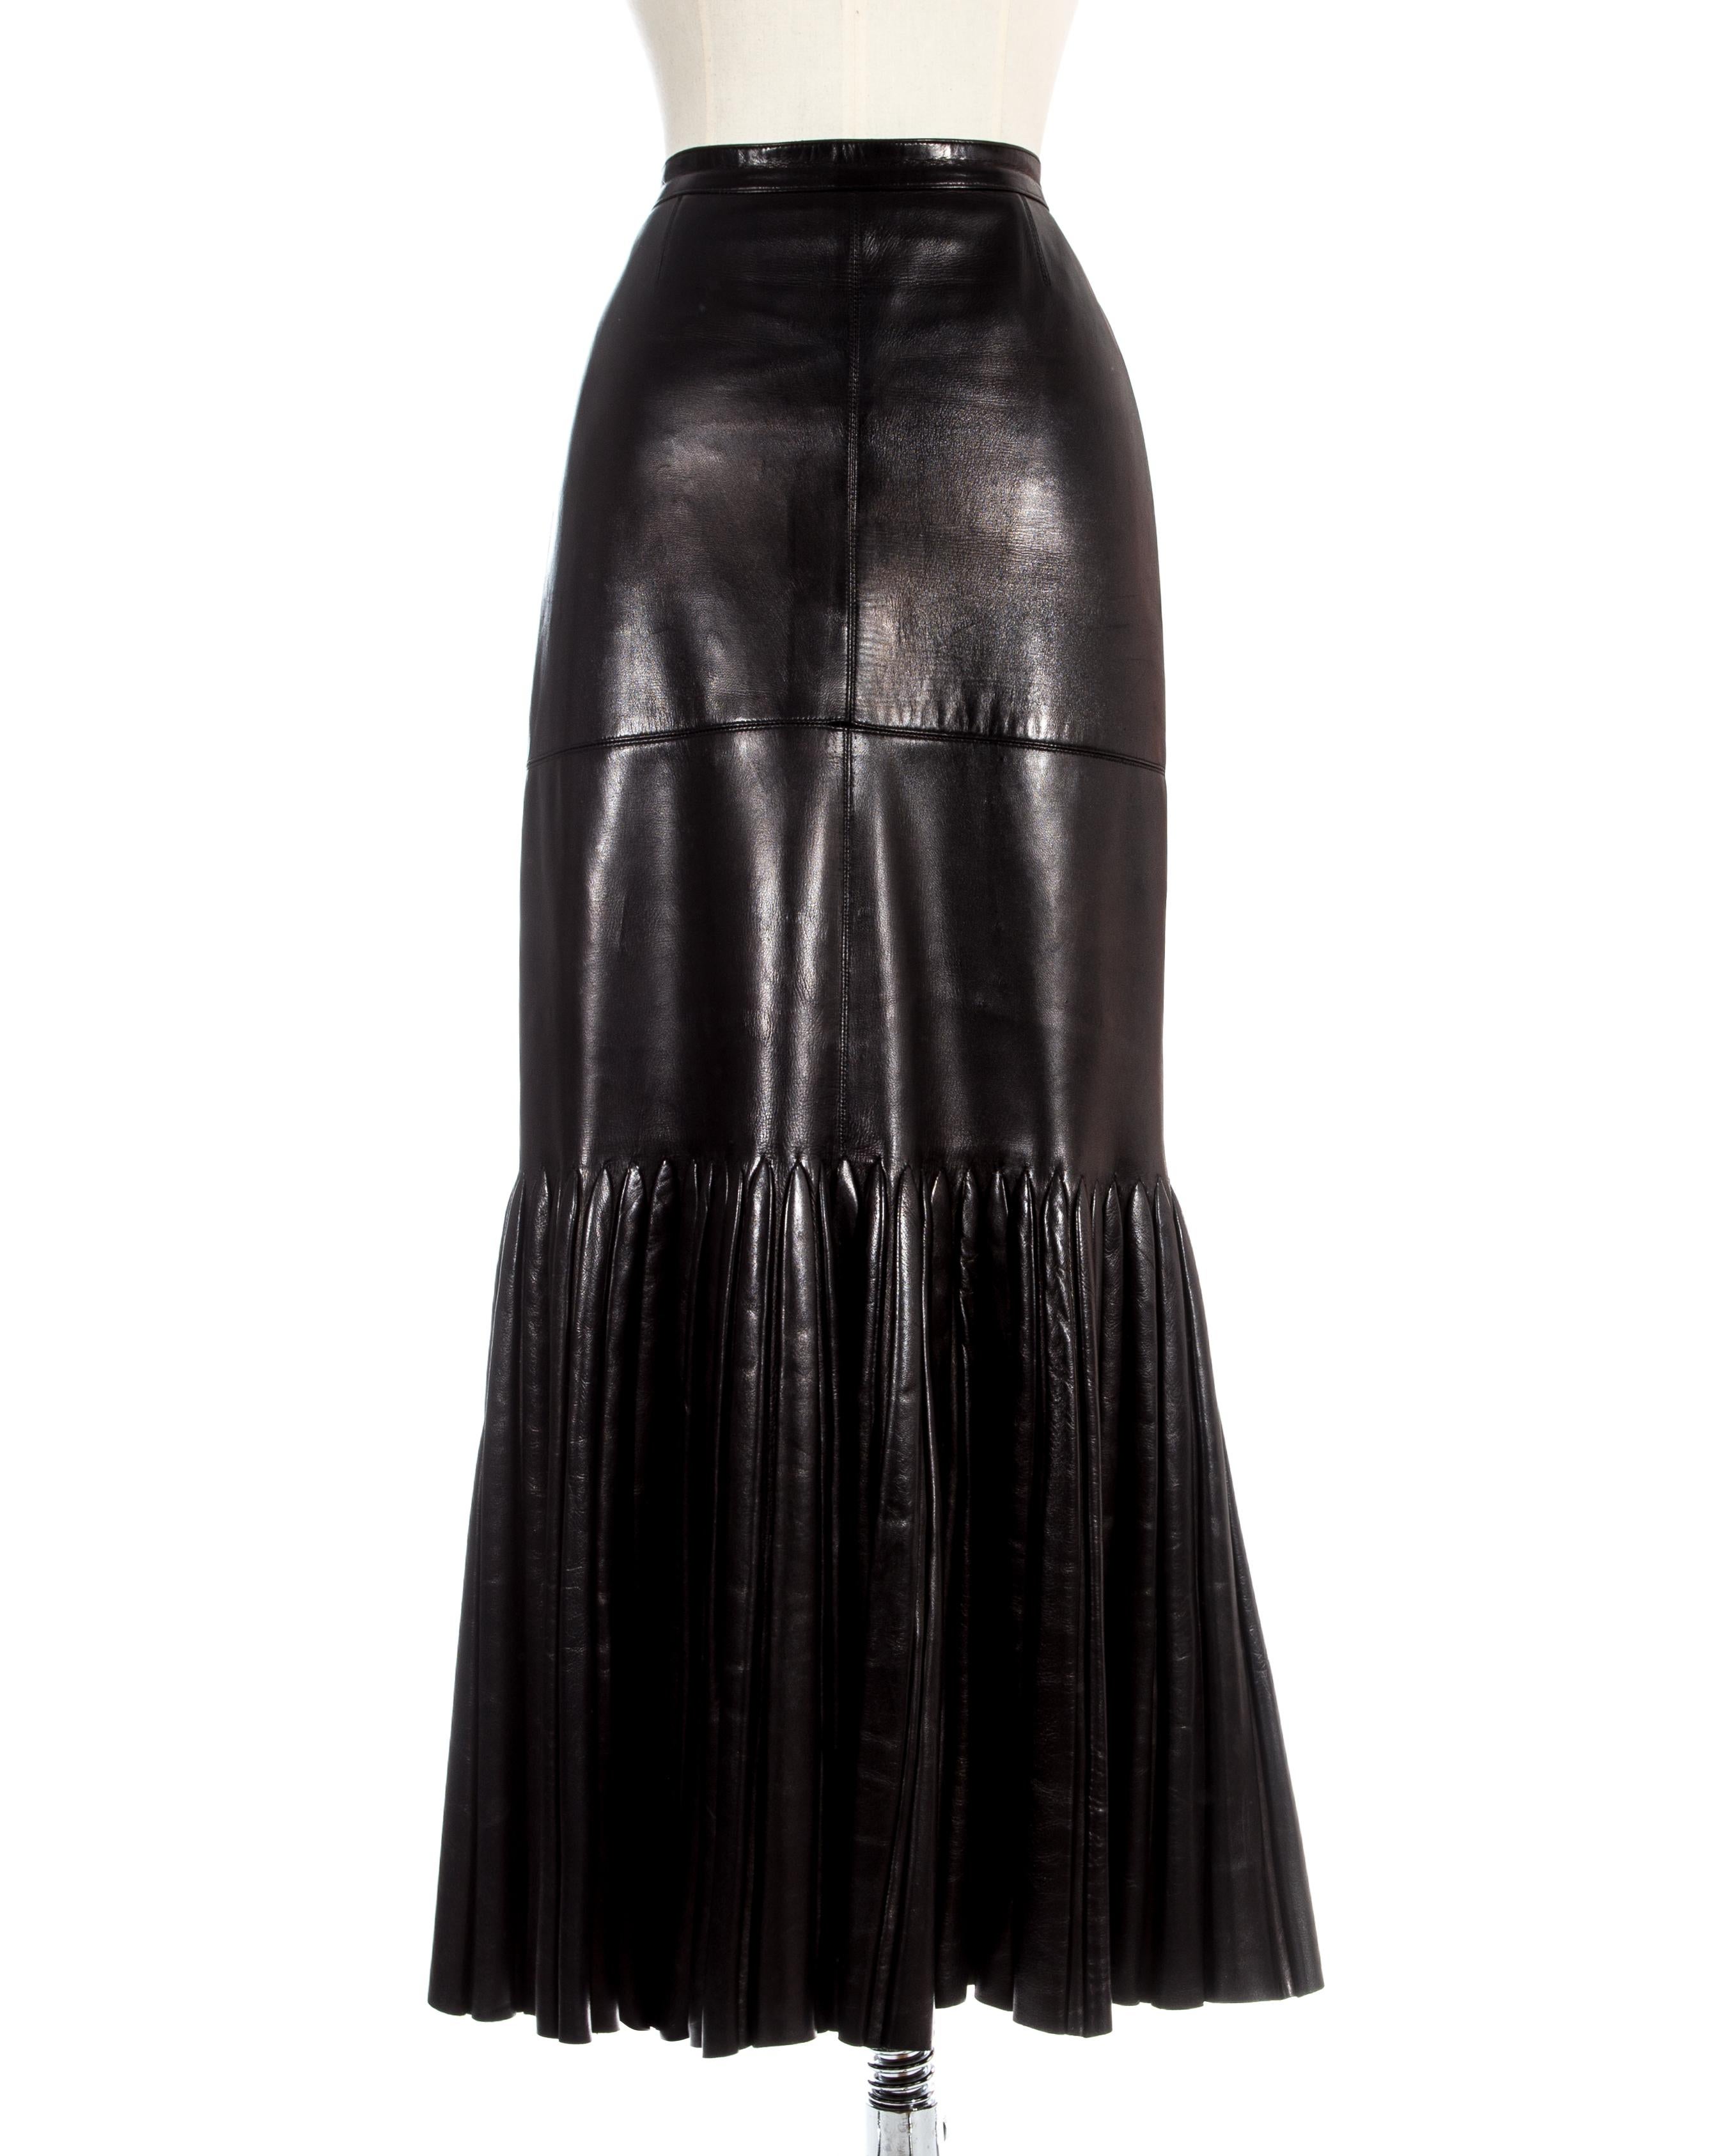 Azzedine Alaia; black leather skirt, pencil-slim, of softest calf leather, with multi-gored pleated 'mermaid' hem. 

c. 1999
